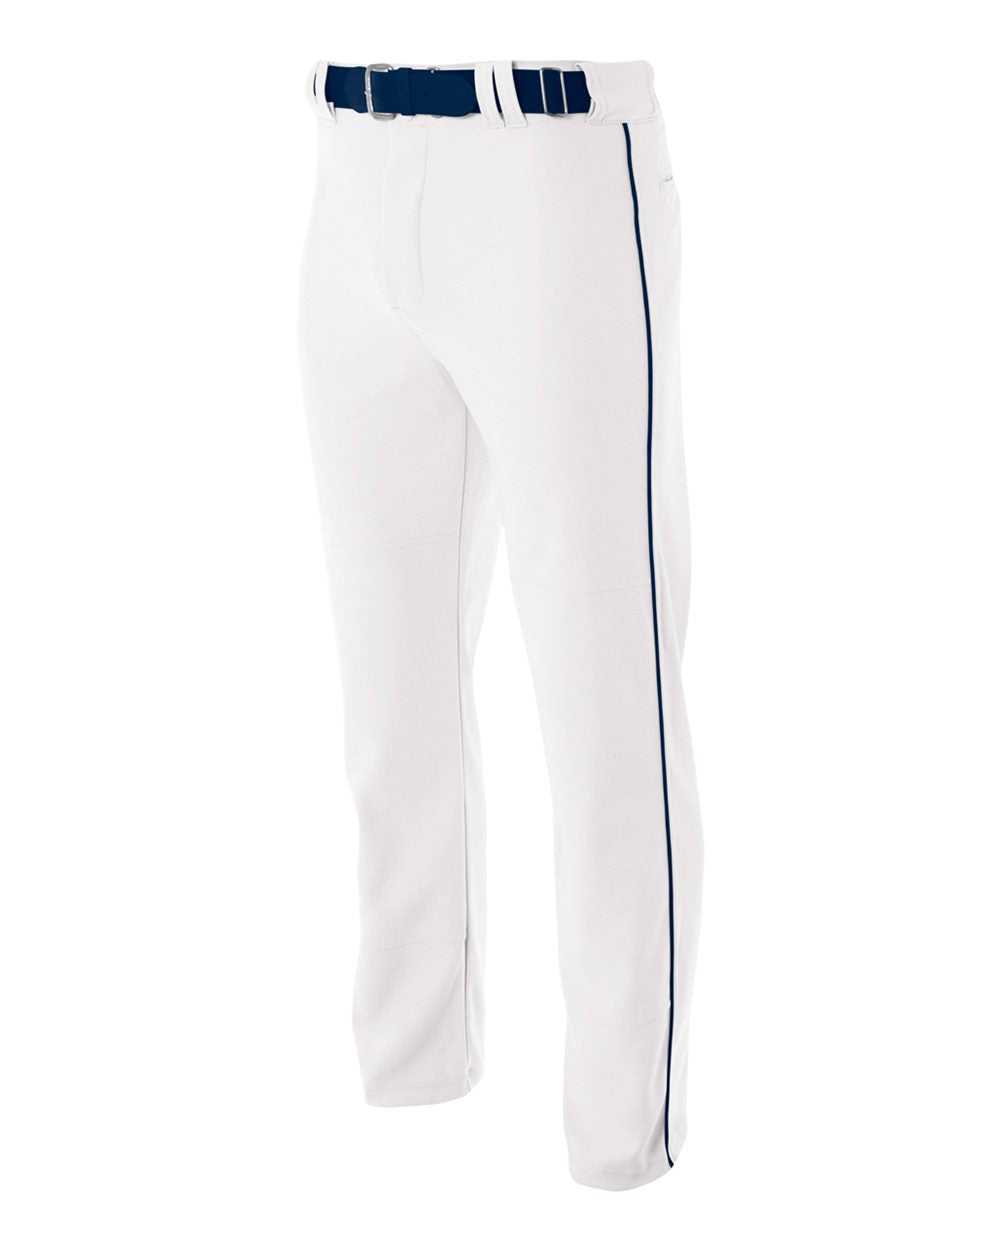 A4 N6162 Pro Style Open Bottom Baggy Cut Baseball Pant - White Navy